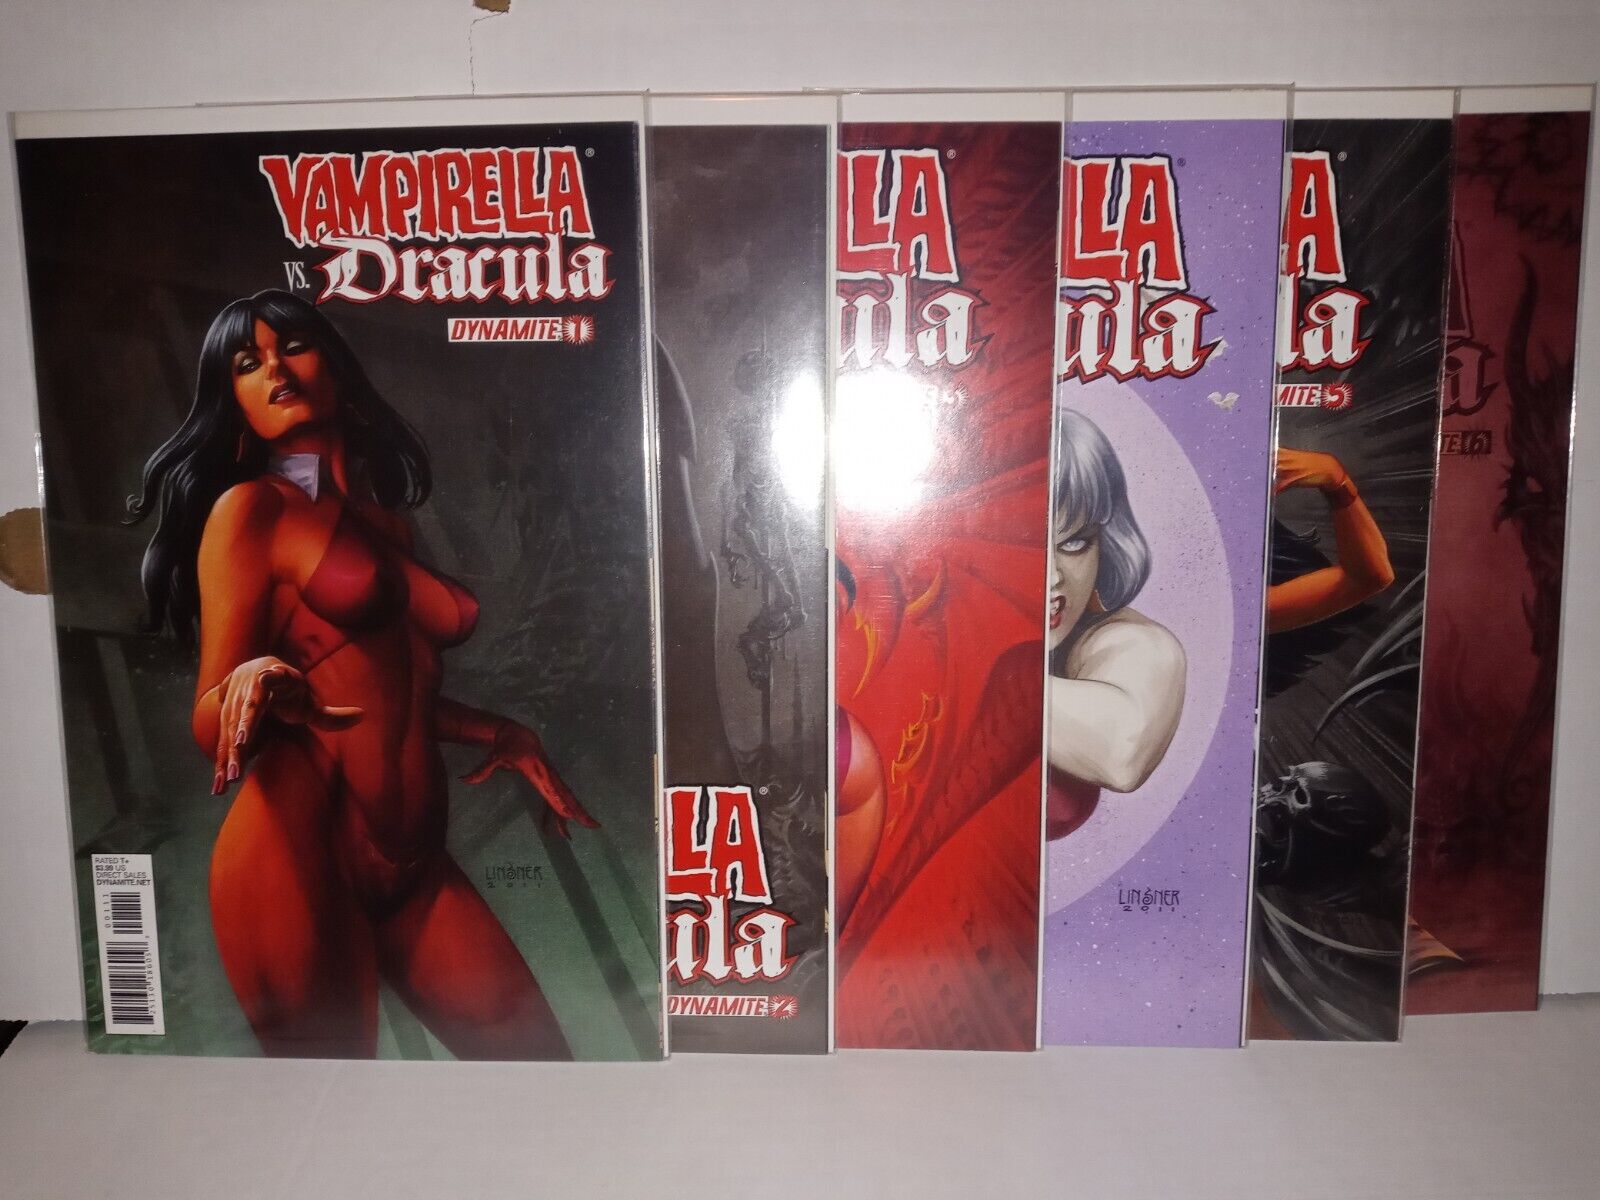 Vampirella vs. Dracula #1-6 Complete Series Dynamite 2012 